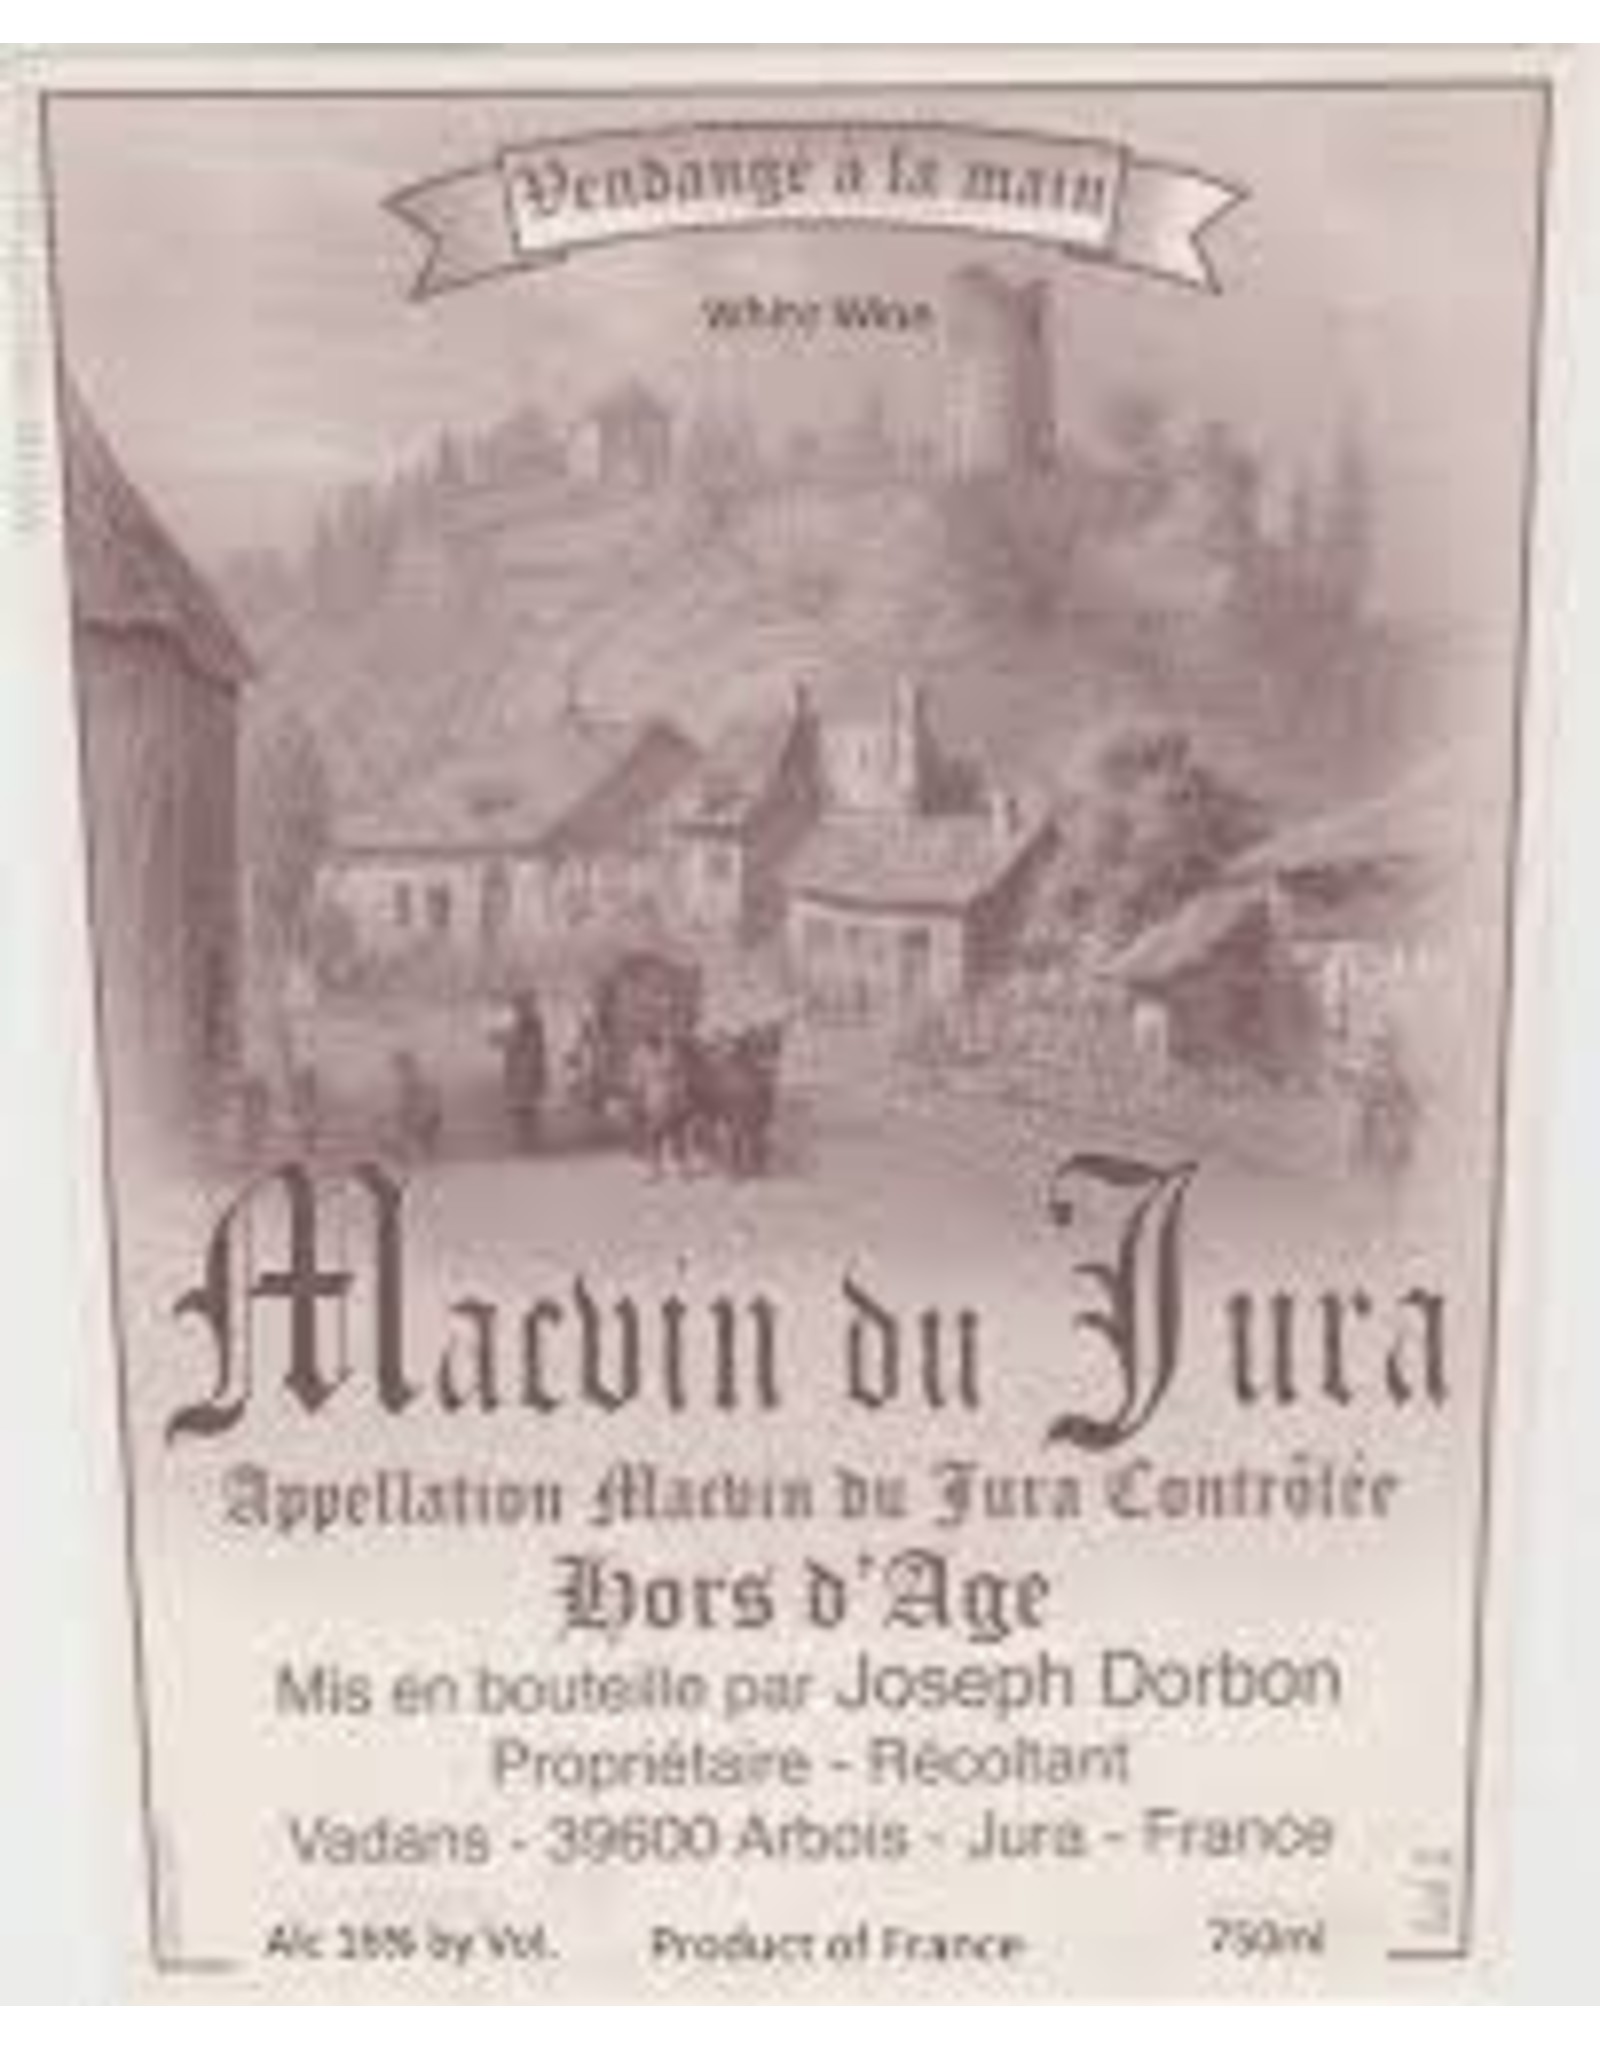 Macvin du Jura, Hors d’Age, Dorbon 2005